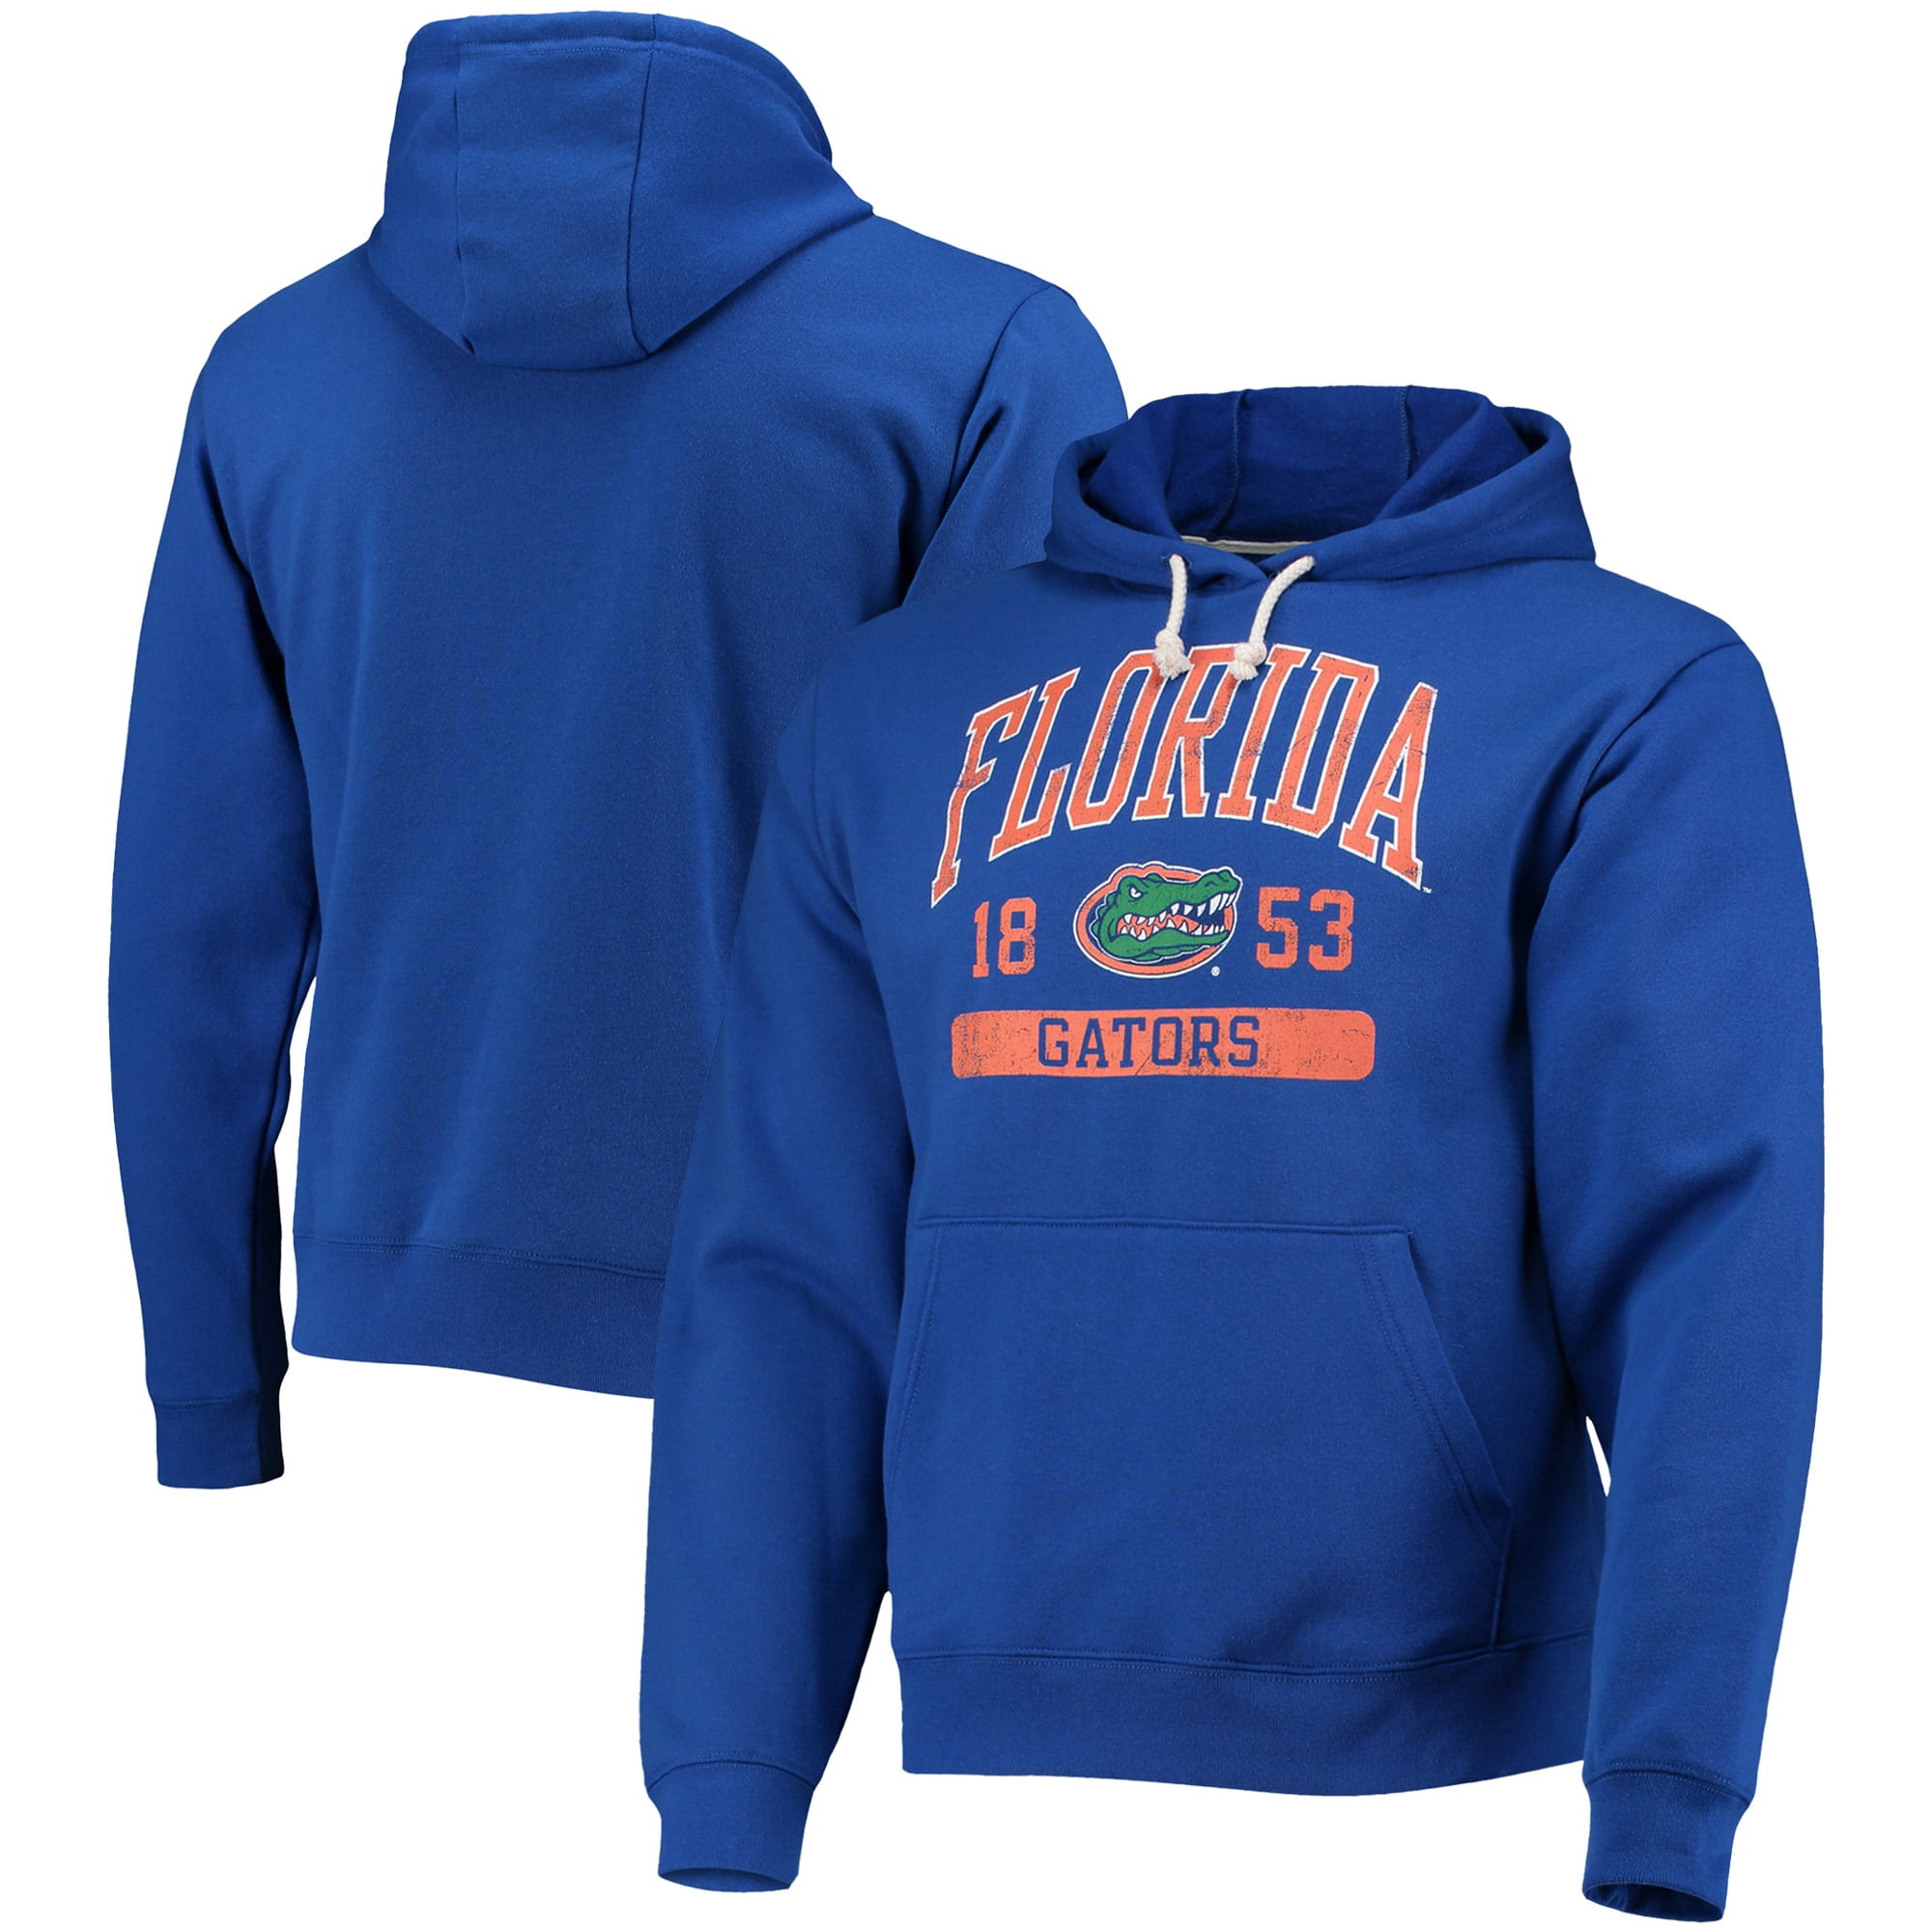 Florida Gators NCAA Youth Toddler National Champions Limited Edition Wool Jacket 